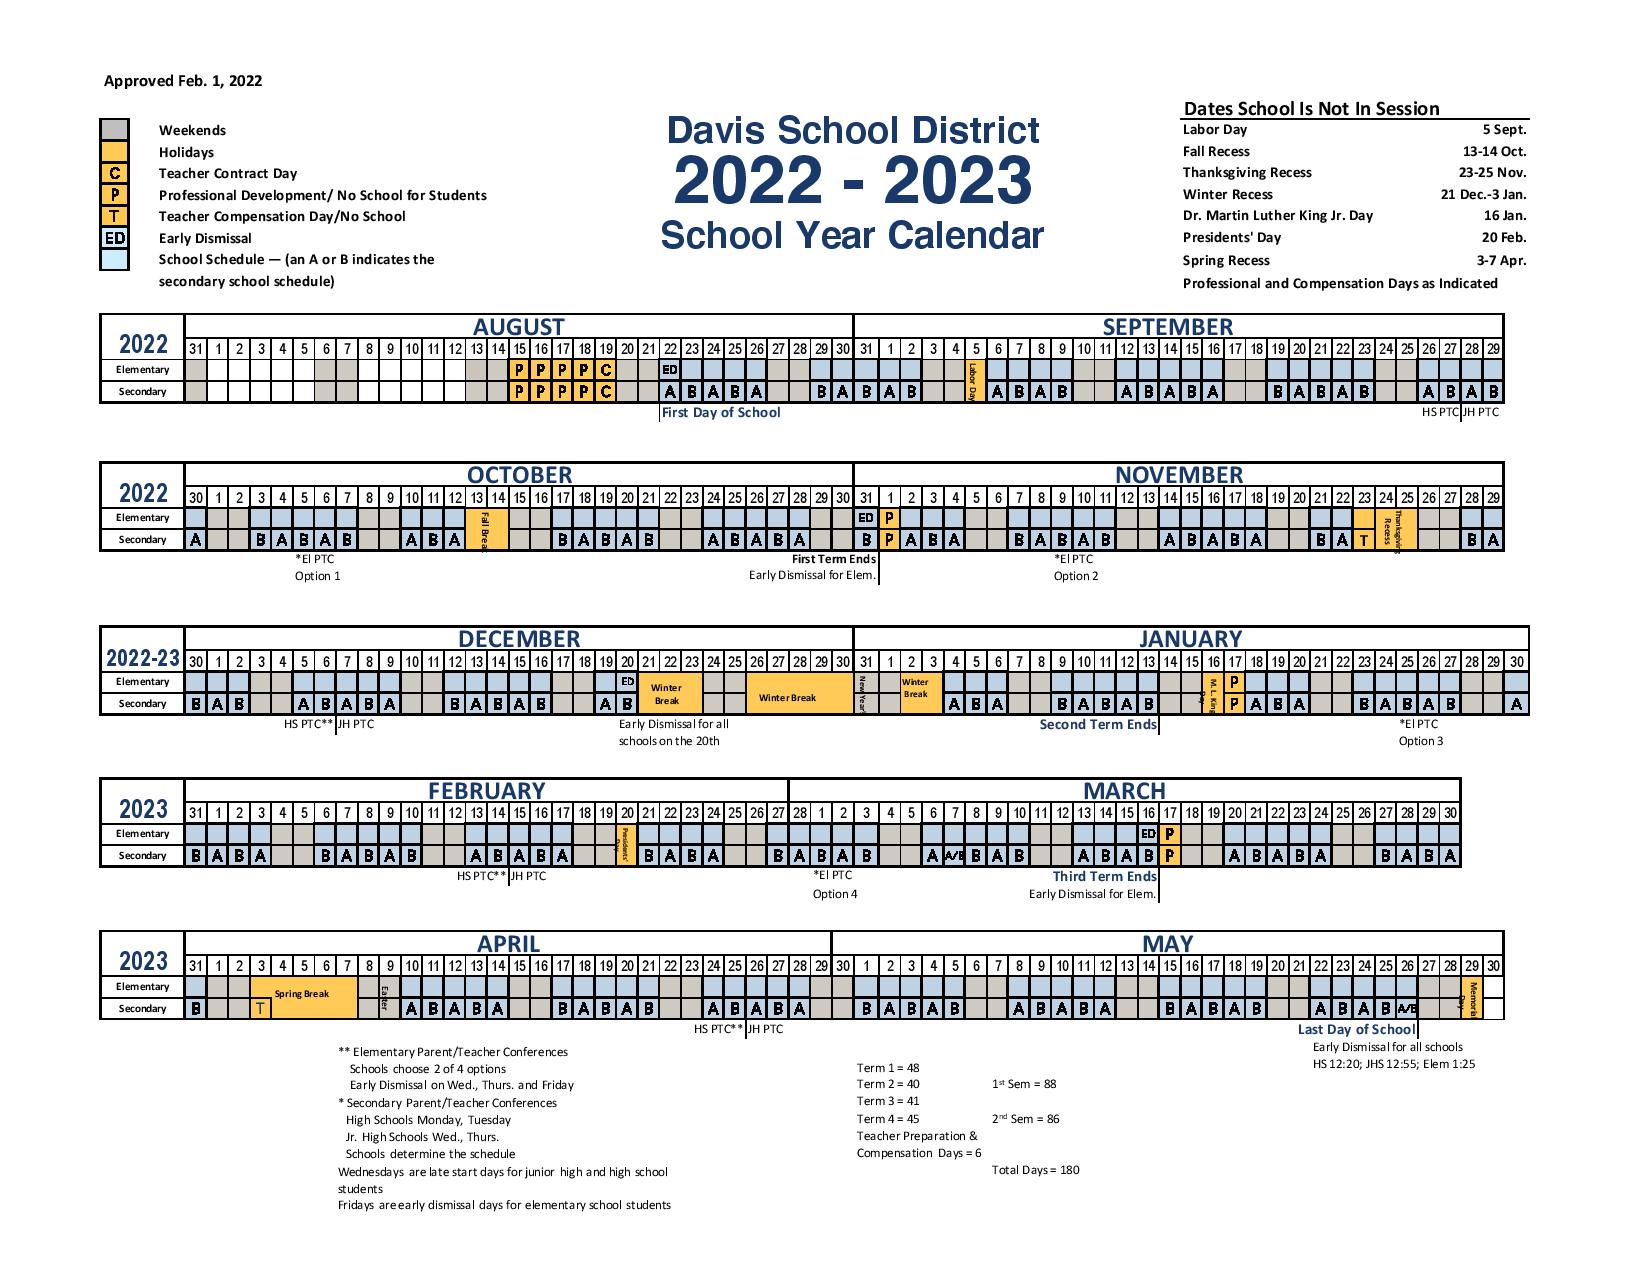 Davis School District Calendar 20222023 in PDF Format